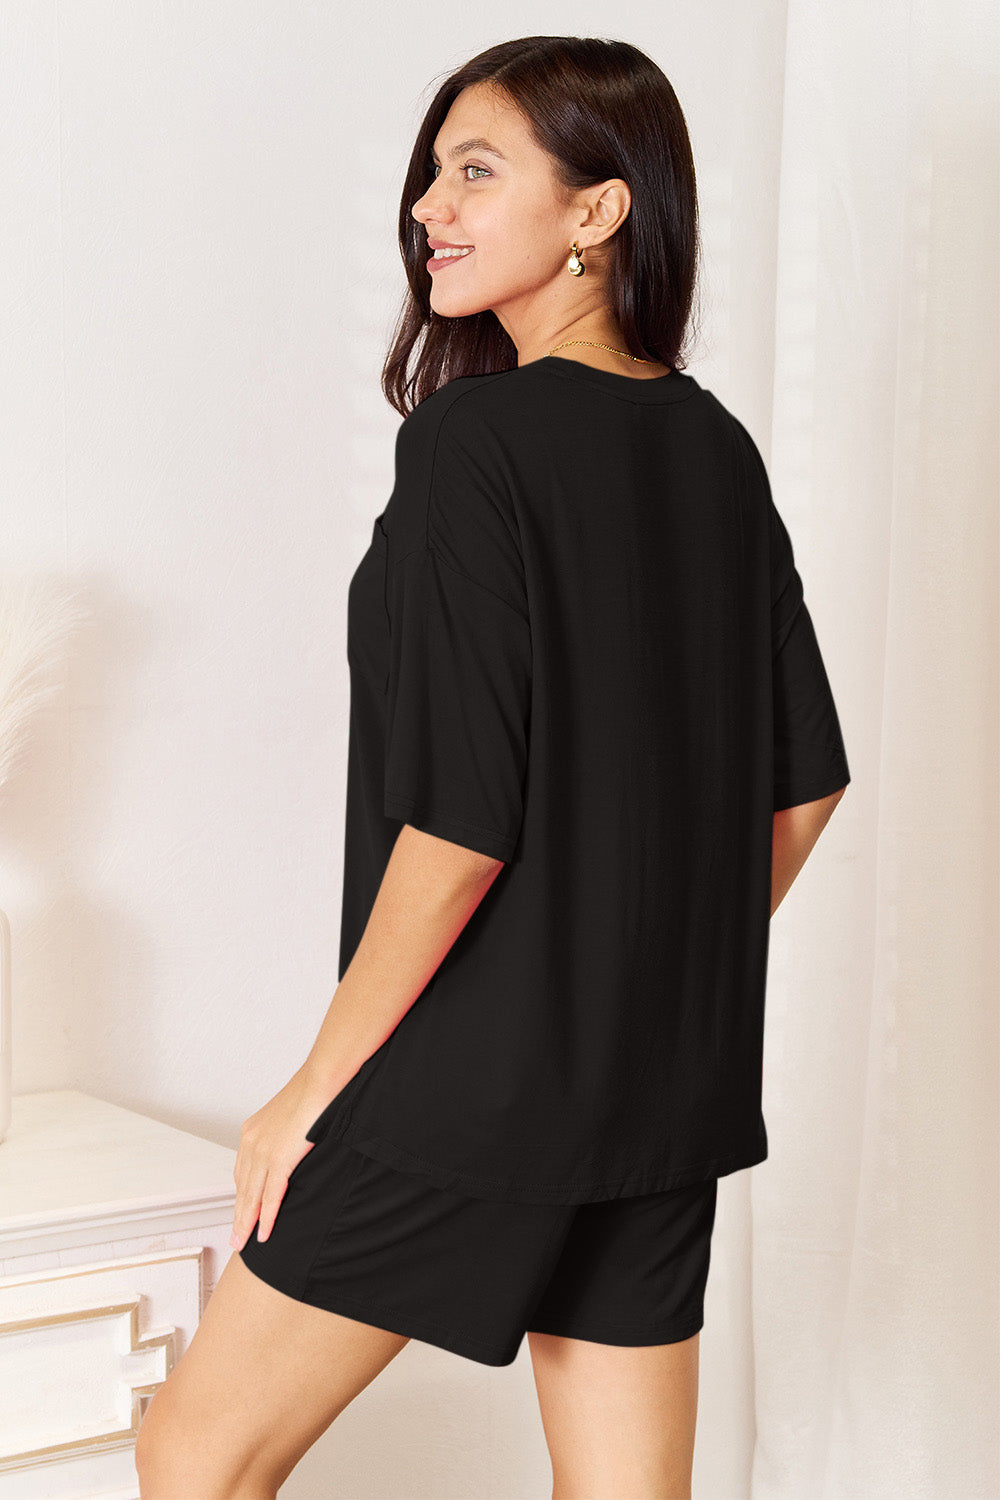 Basic Bae Full Size Soft Rayon Half Sleeve Top and Shorts Set Sets Trendsi   